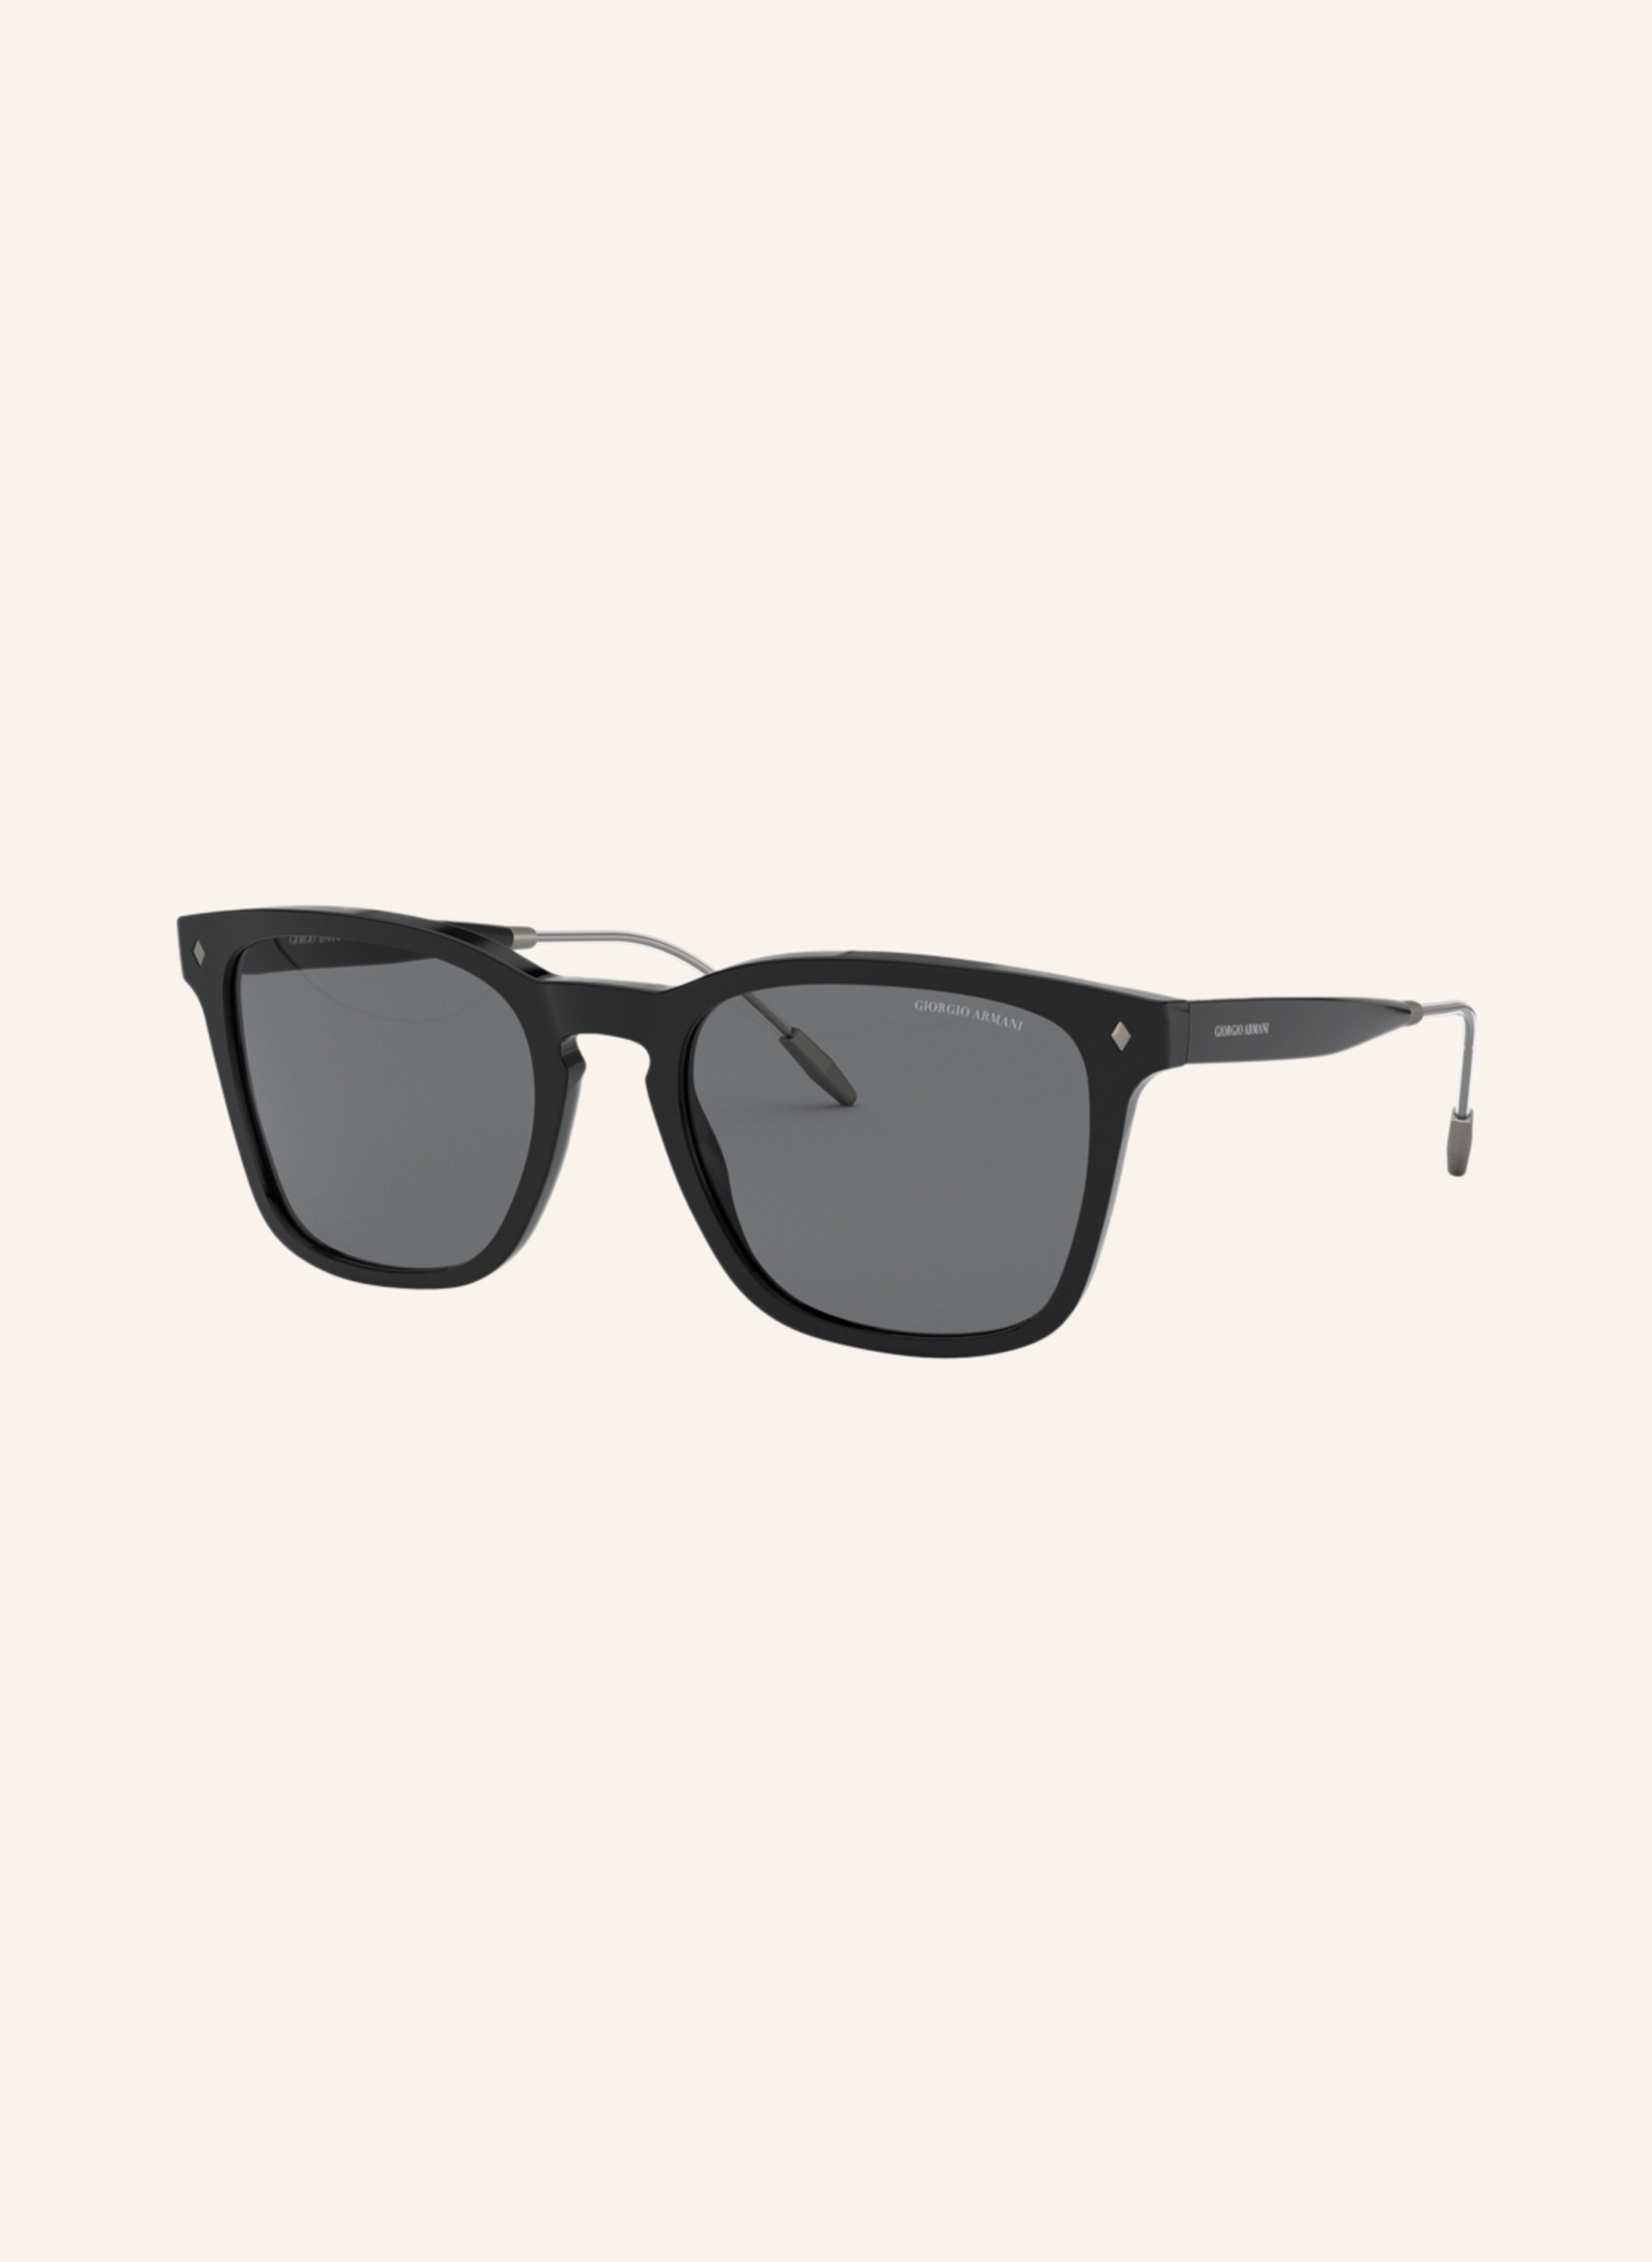 Armani EA4047 Polarized Sunglasses Review | SmartBuyGlasses - YouTube